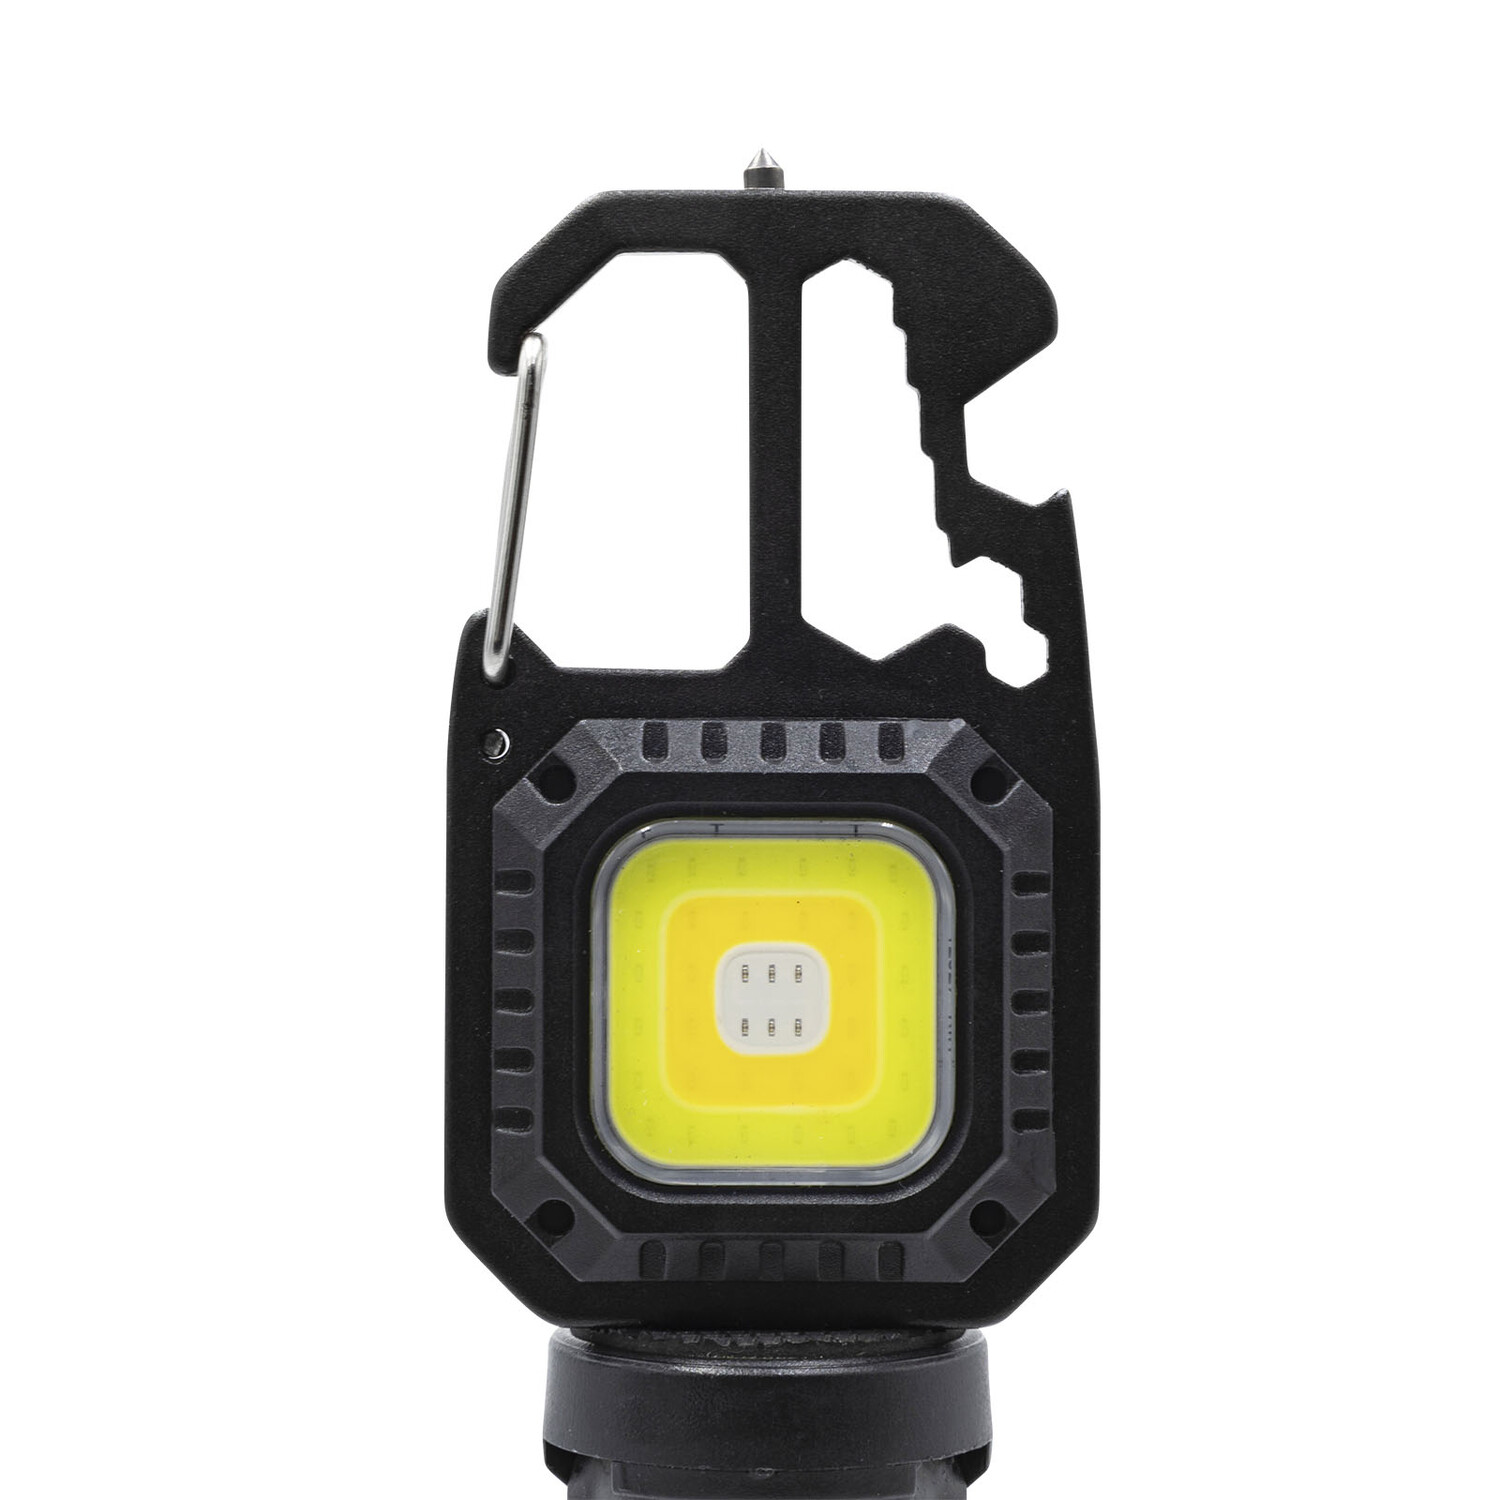 LitezAll Rechargeable 700 Lumen Lantern - LitezAll